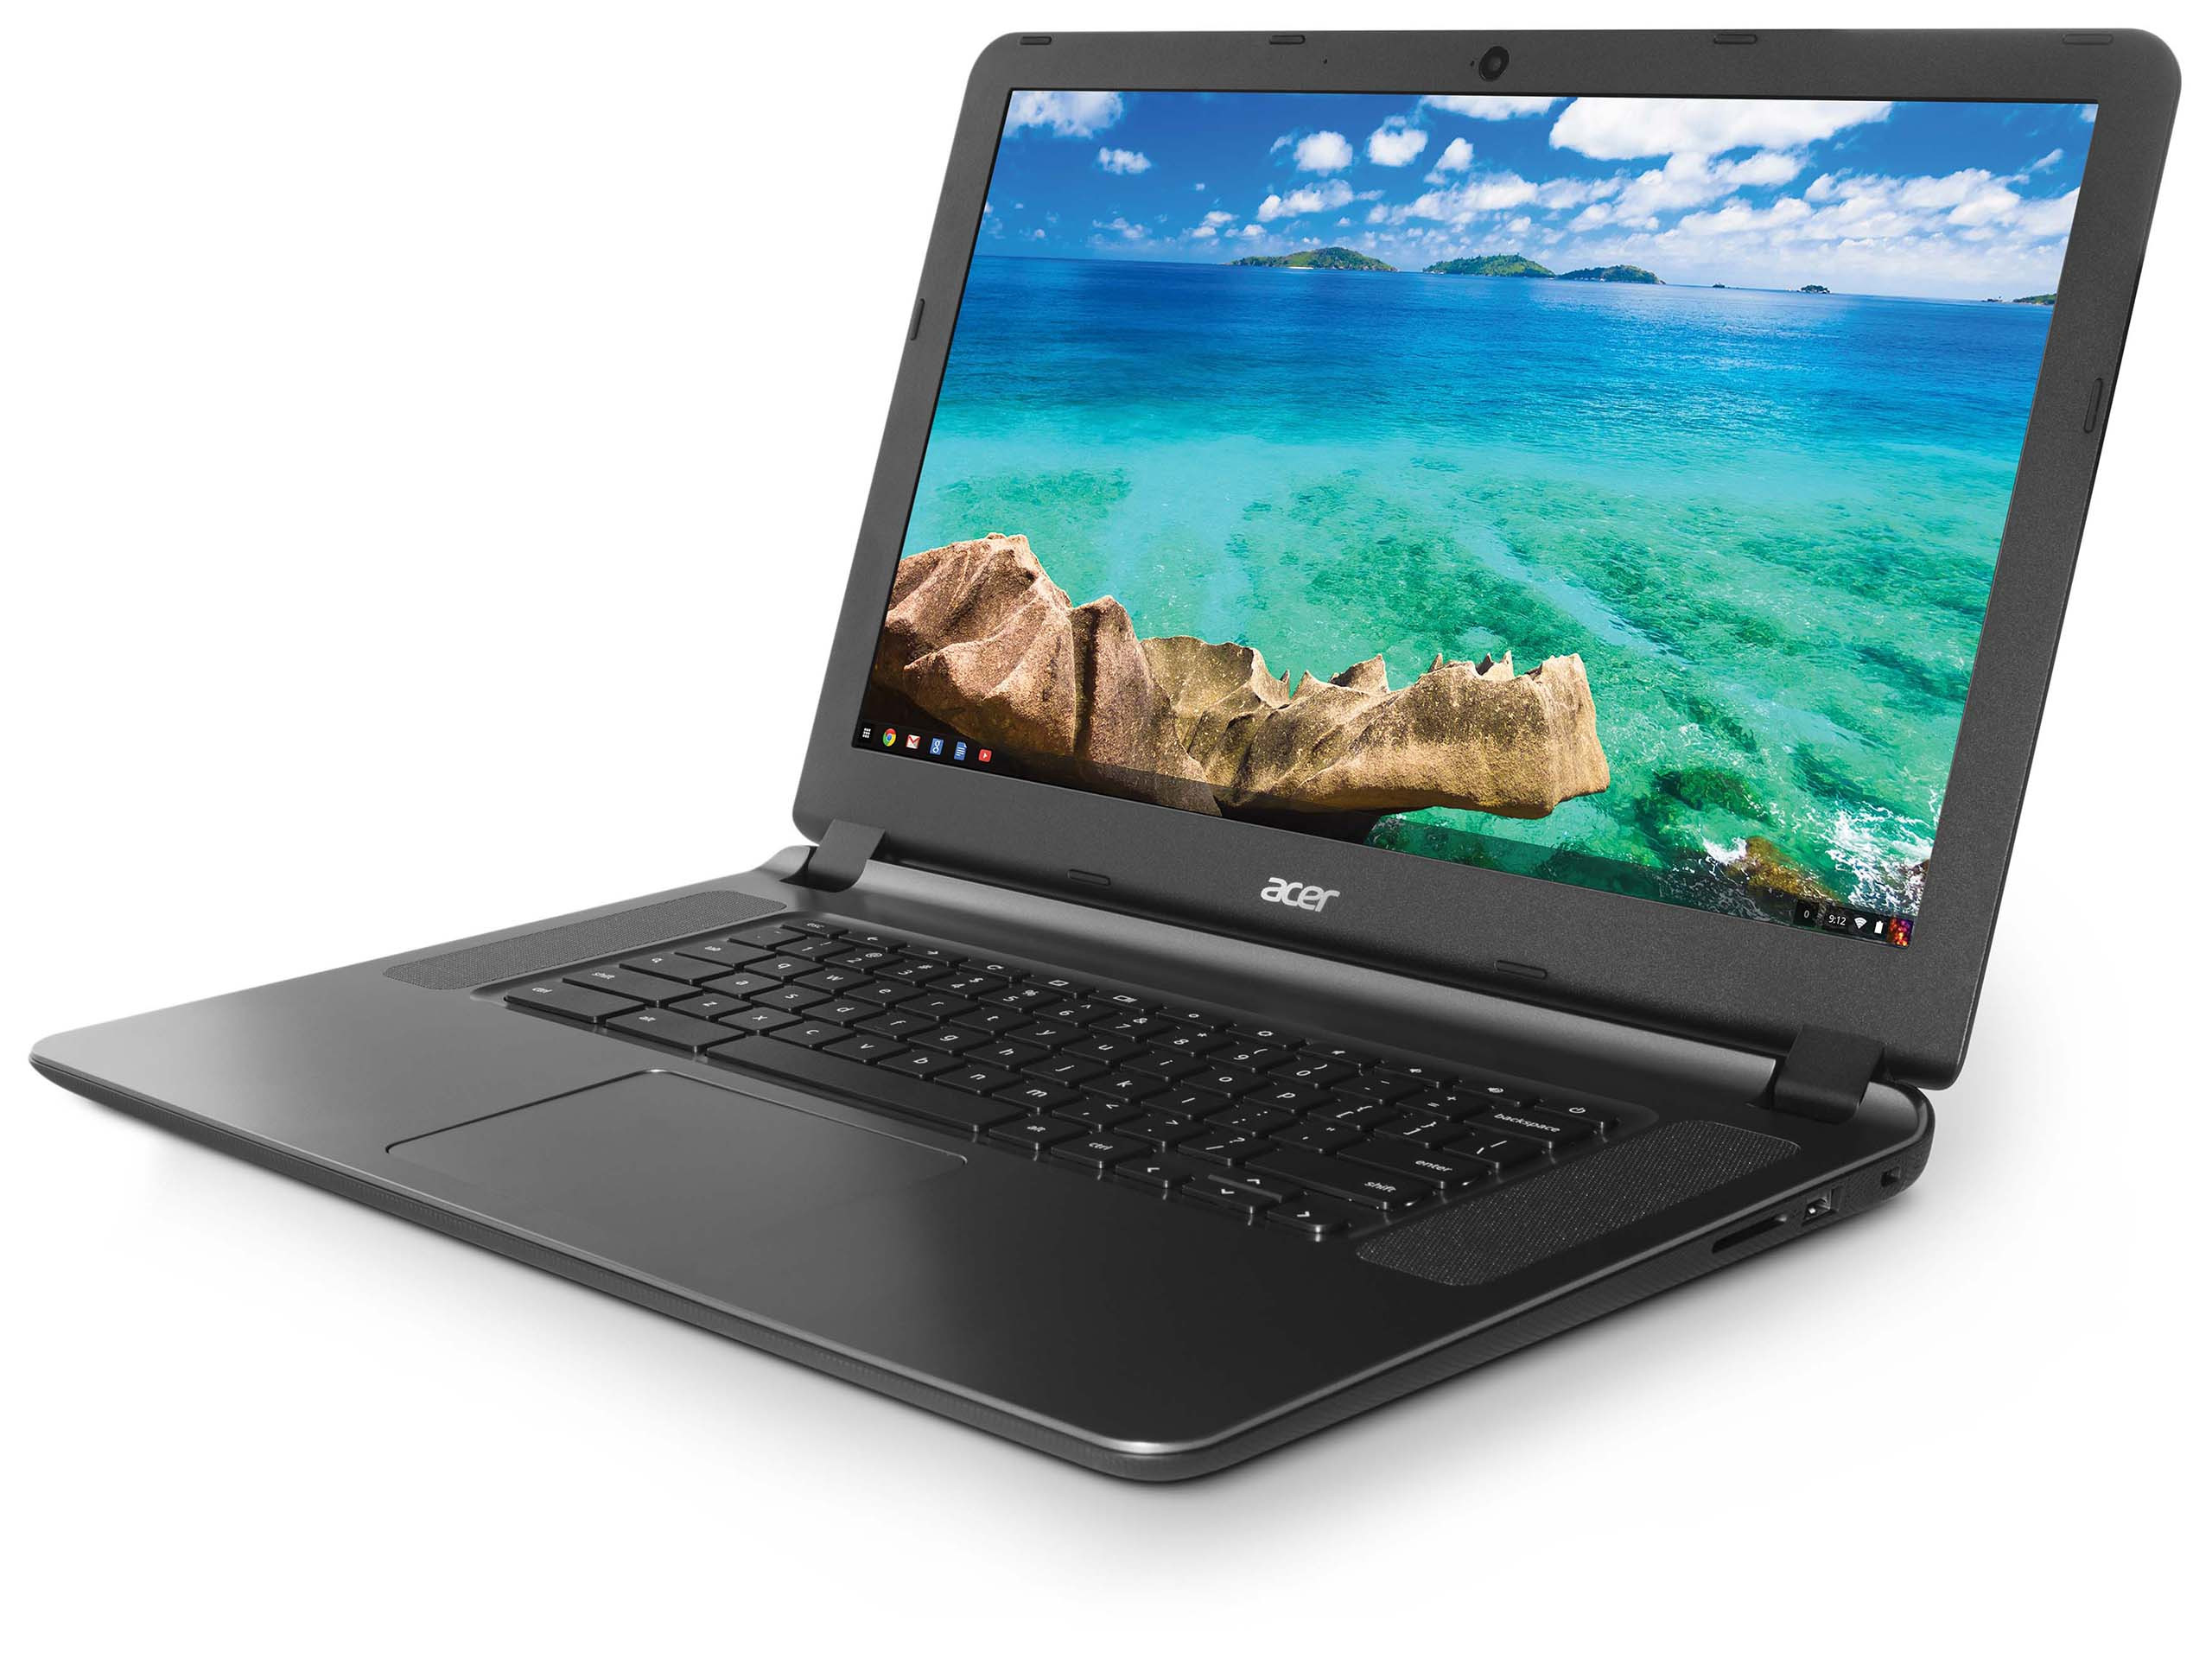  Acer  Chromebook 15 un PC portable  antichoc  300 euros